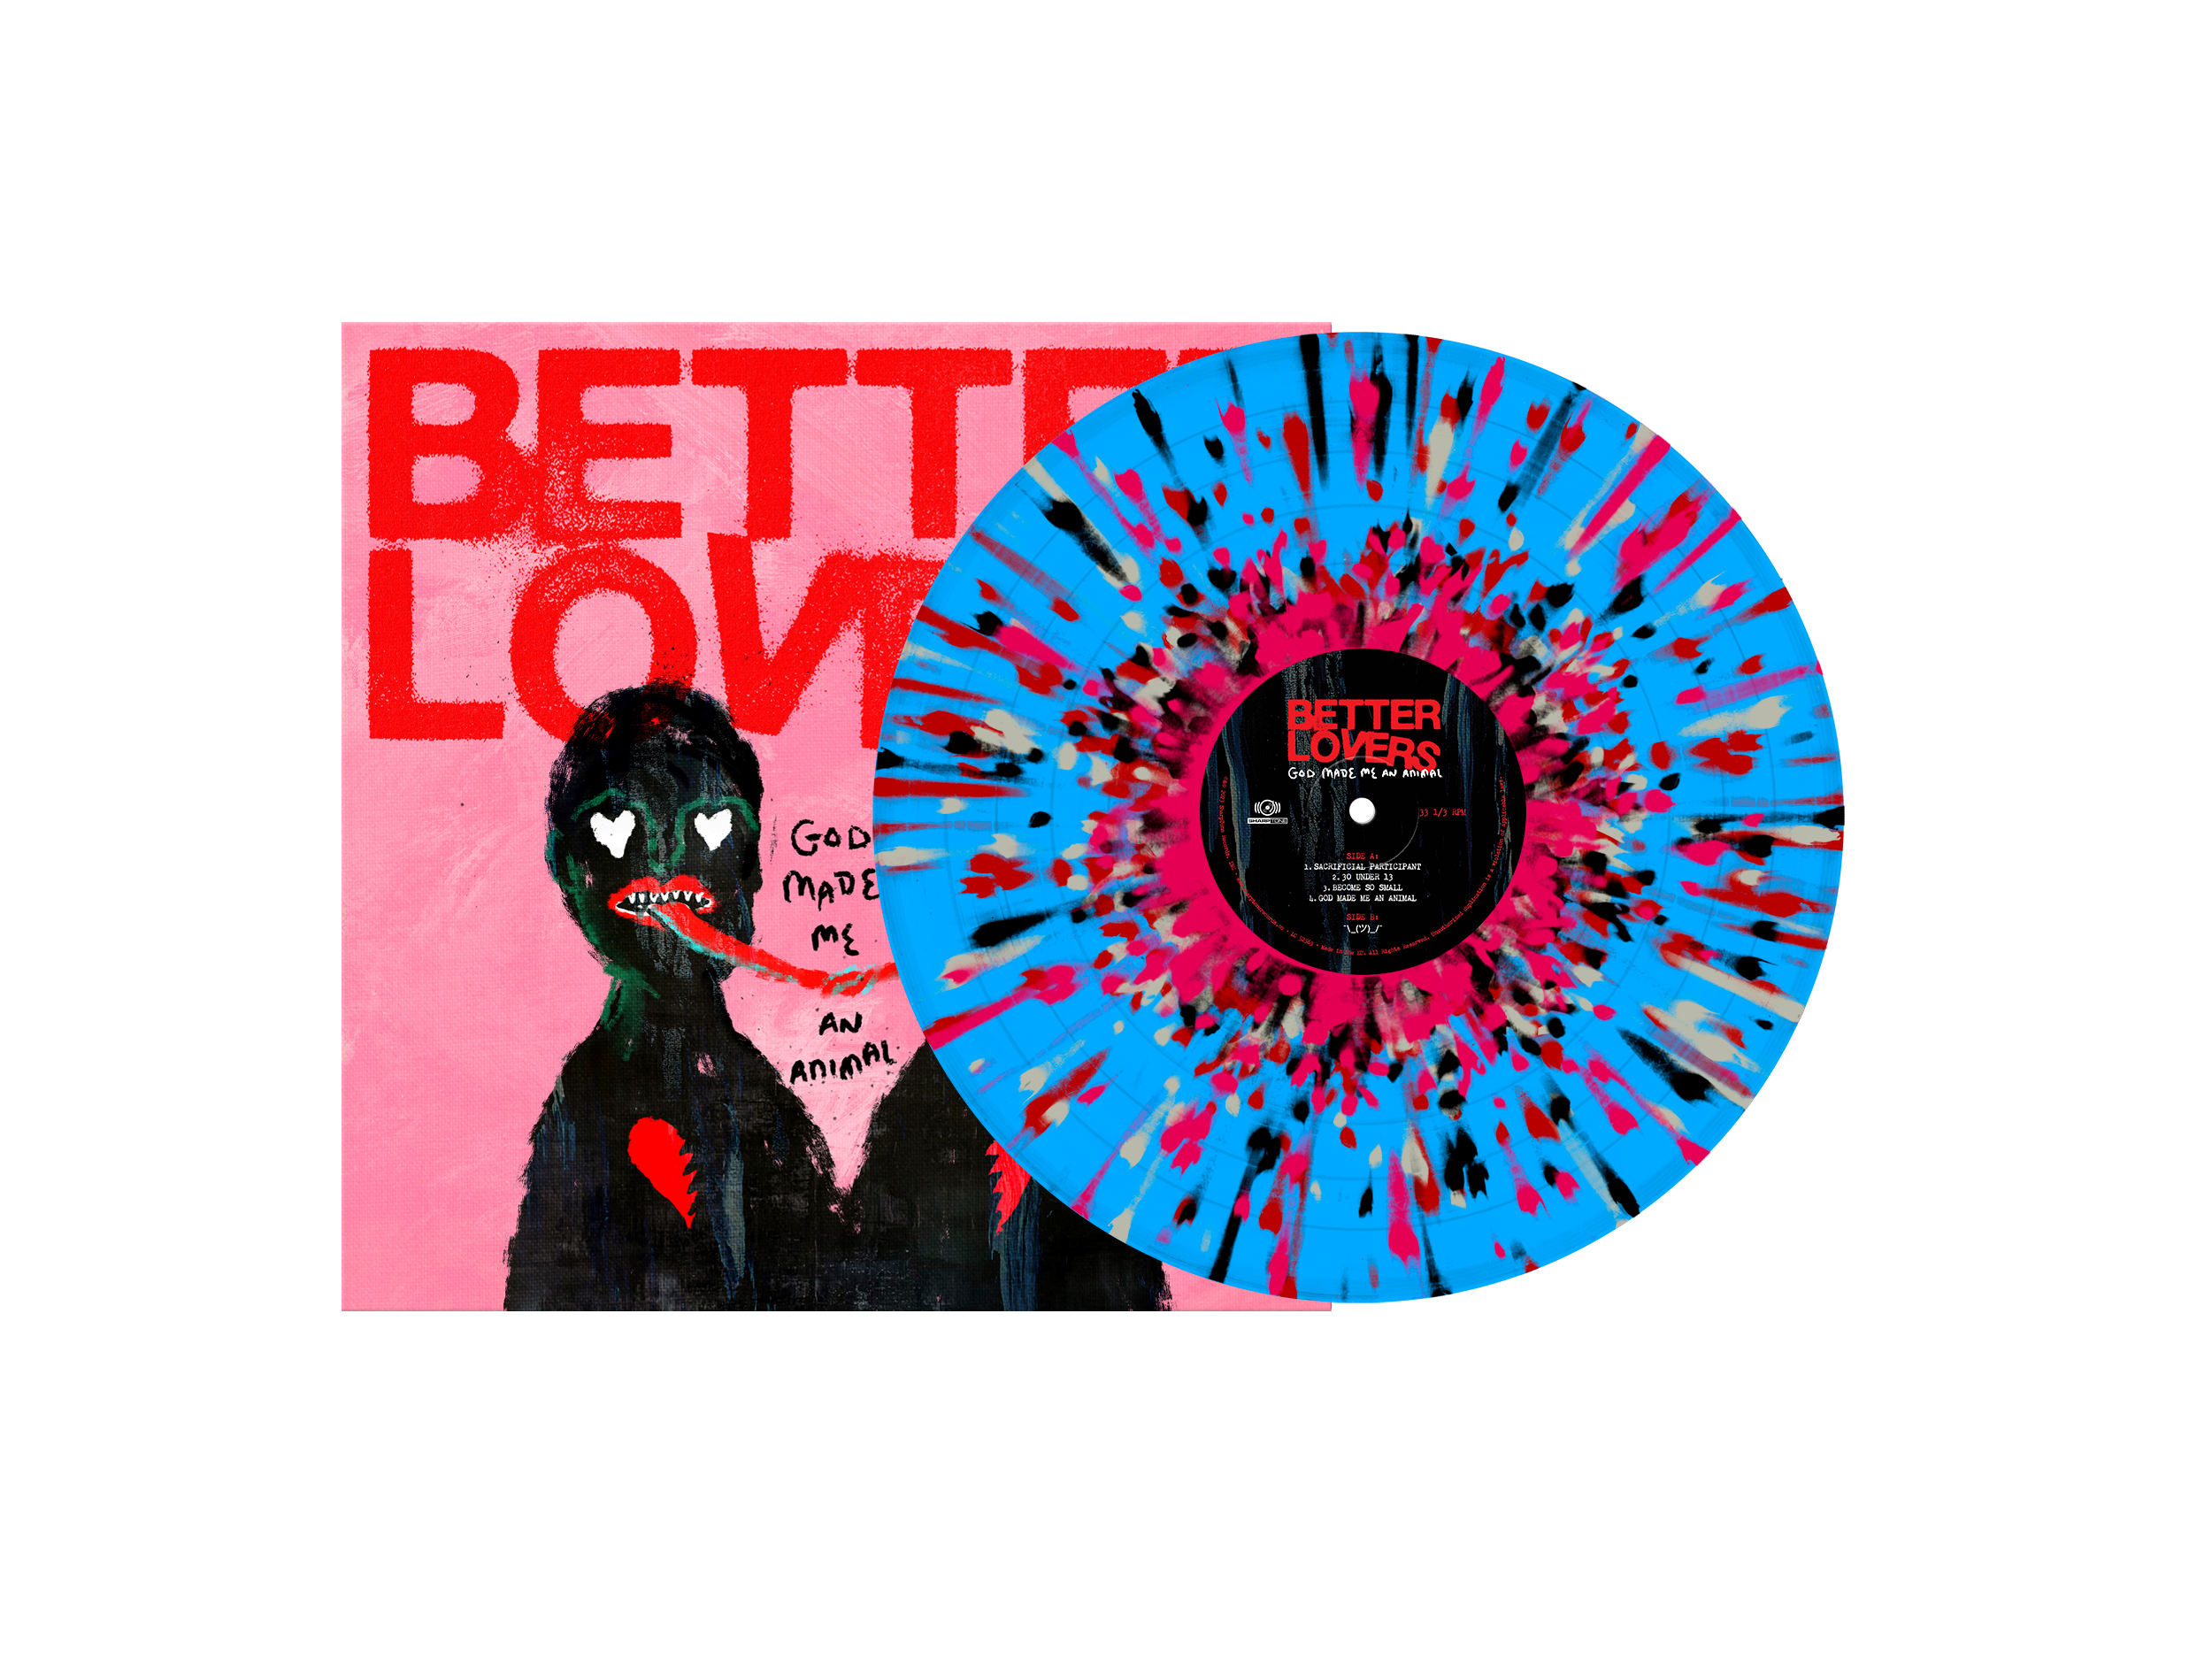 Better Lovers - God Made Me an Animal LP - Turquoise w/ Red, White, Pink, Black Splatter 